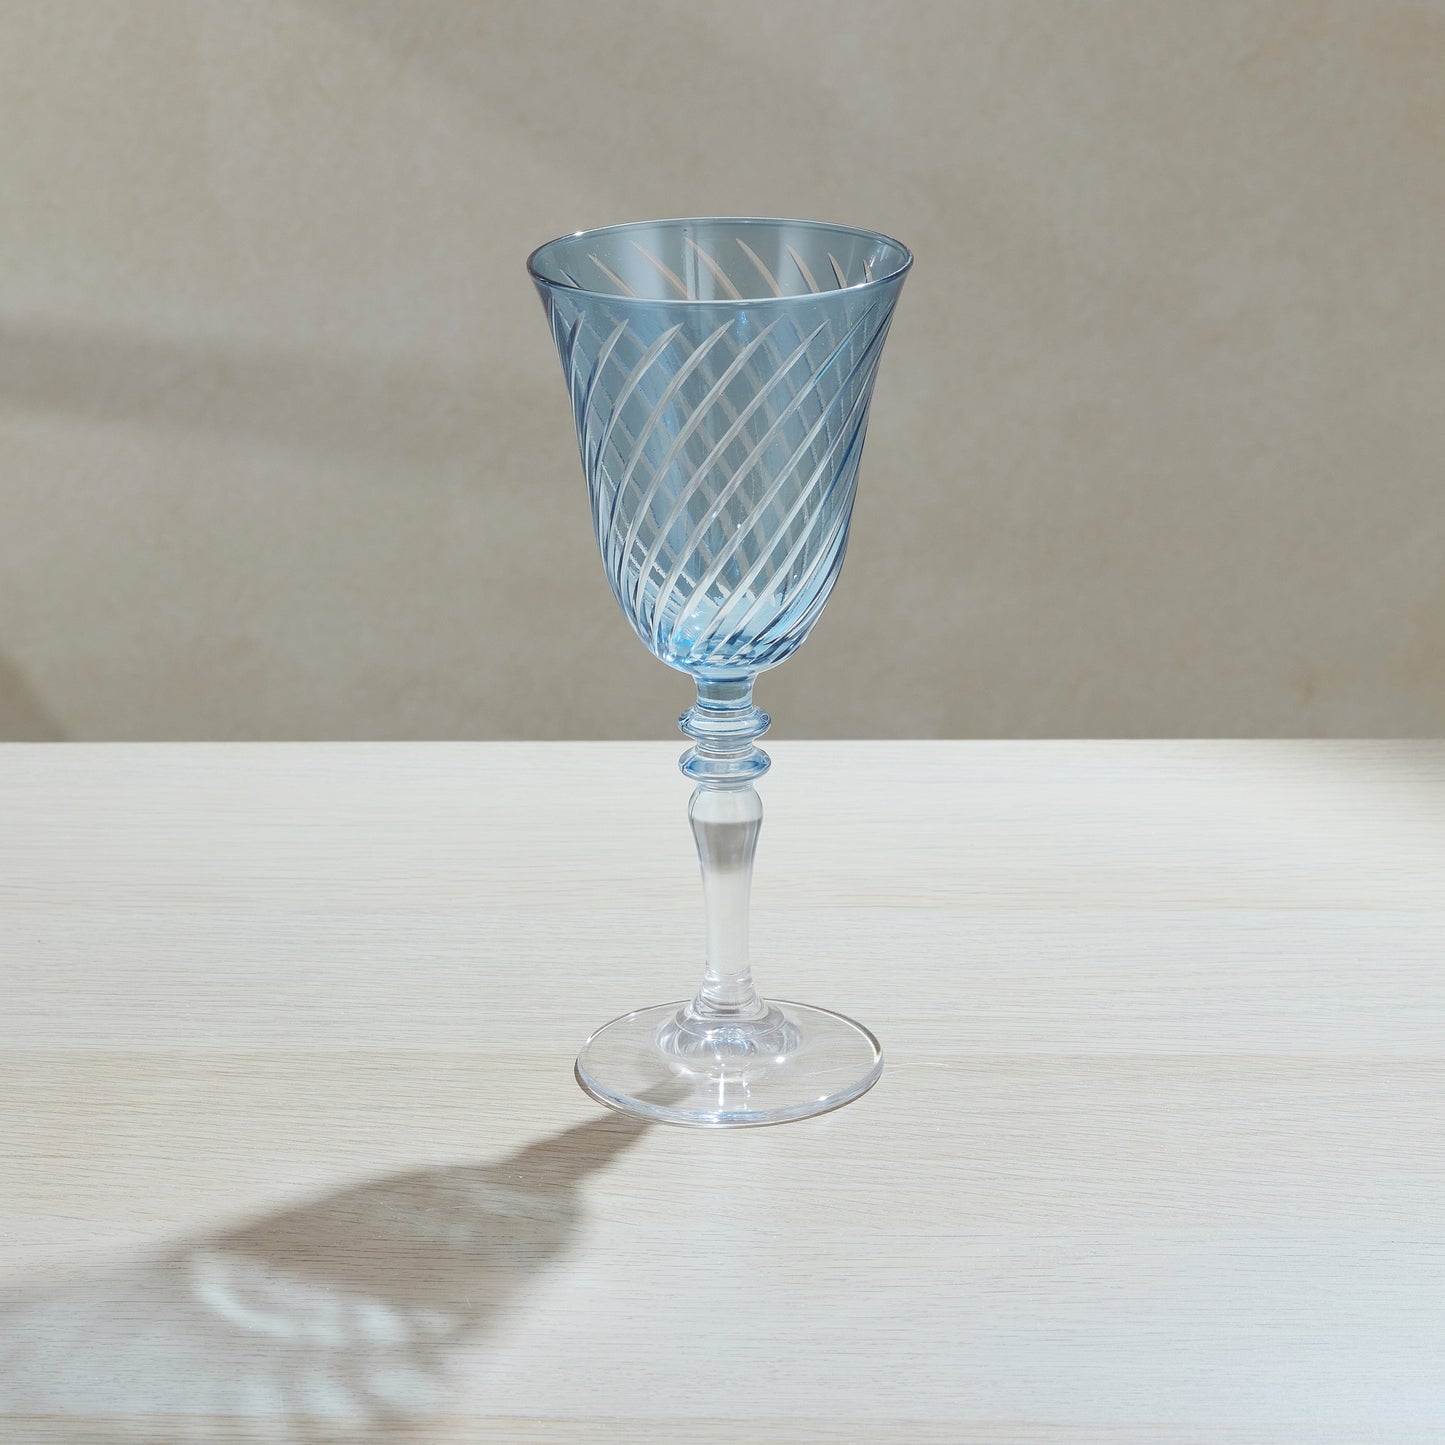 Set of 6 Palermo Wine Glass - Blue